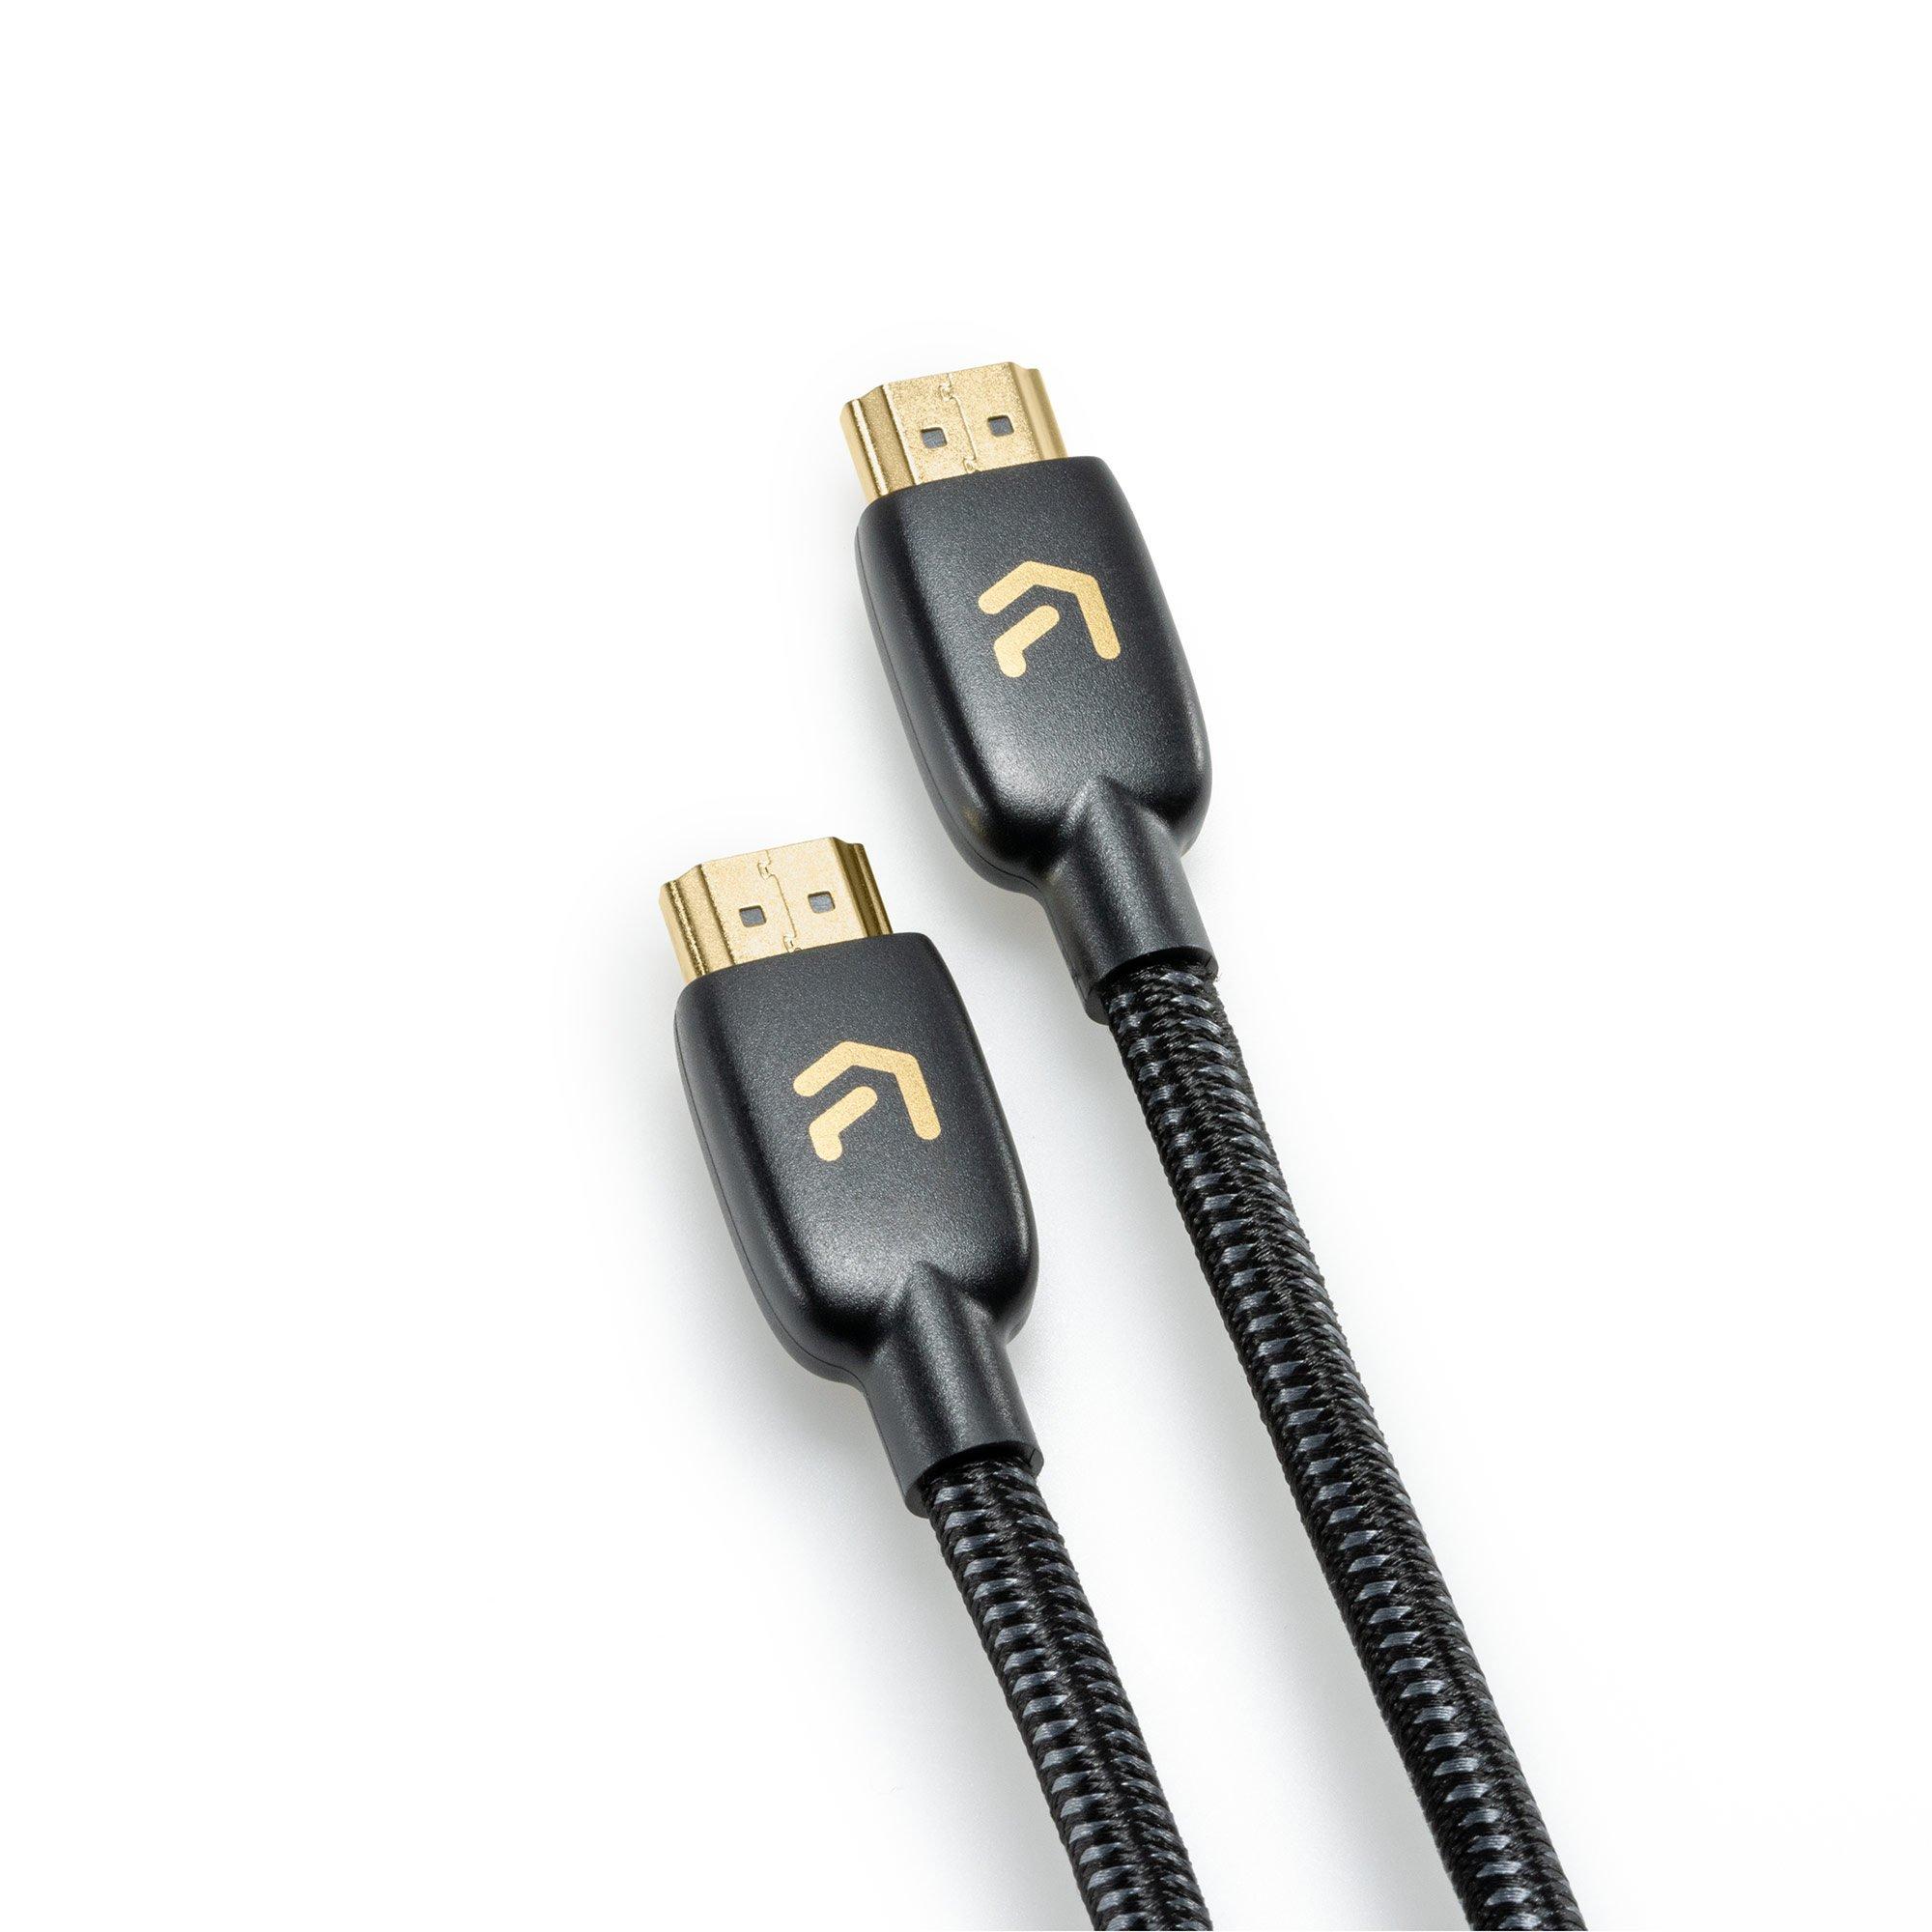 Atrix 4K/8K Ultra High Speed Braided Nylon 10-ft HDMI Cable